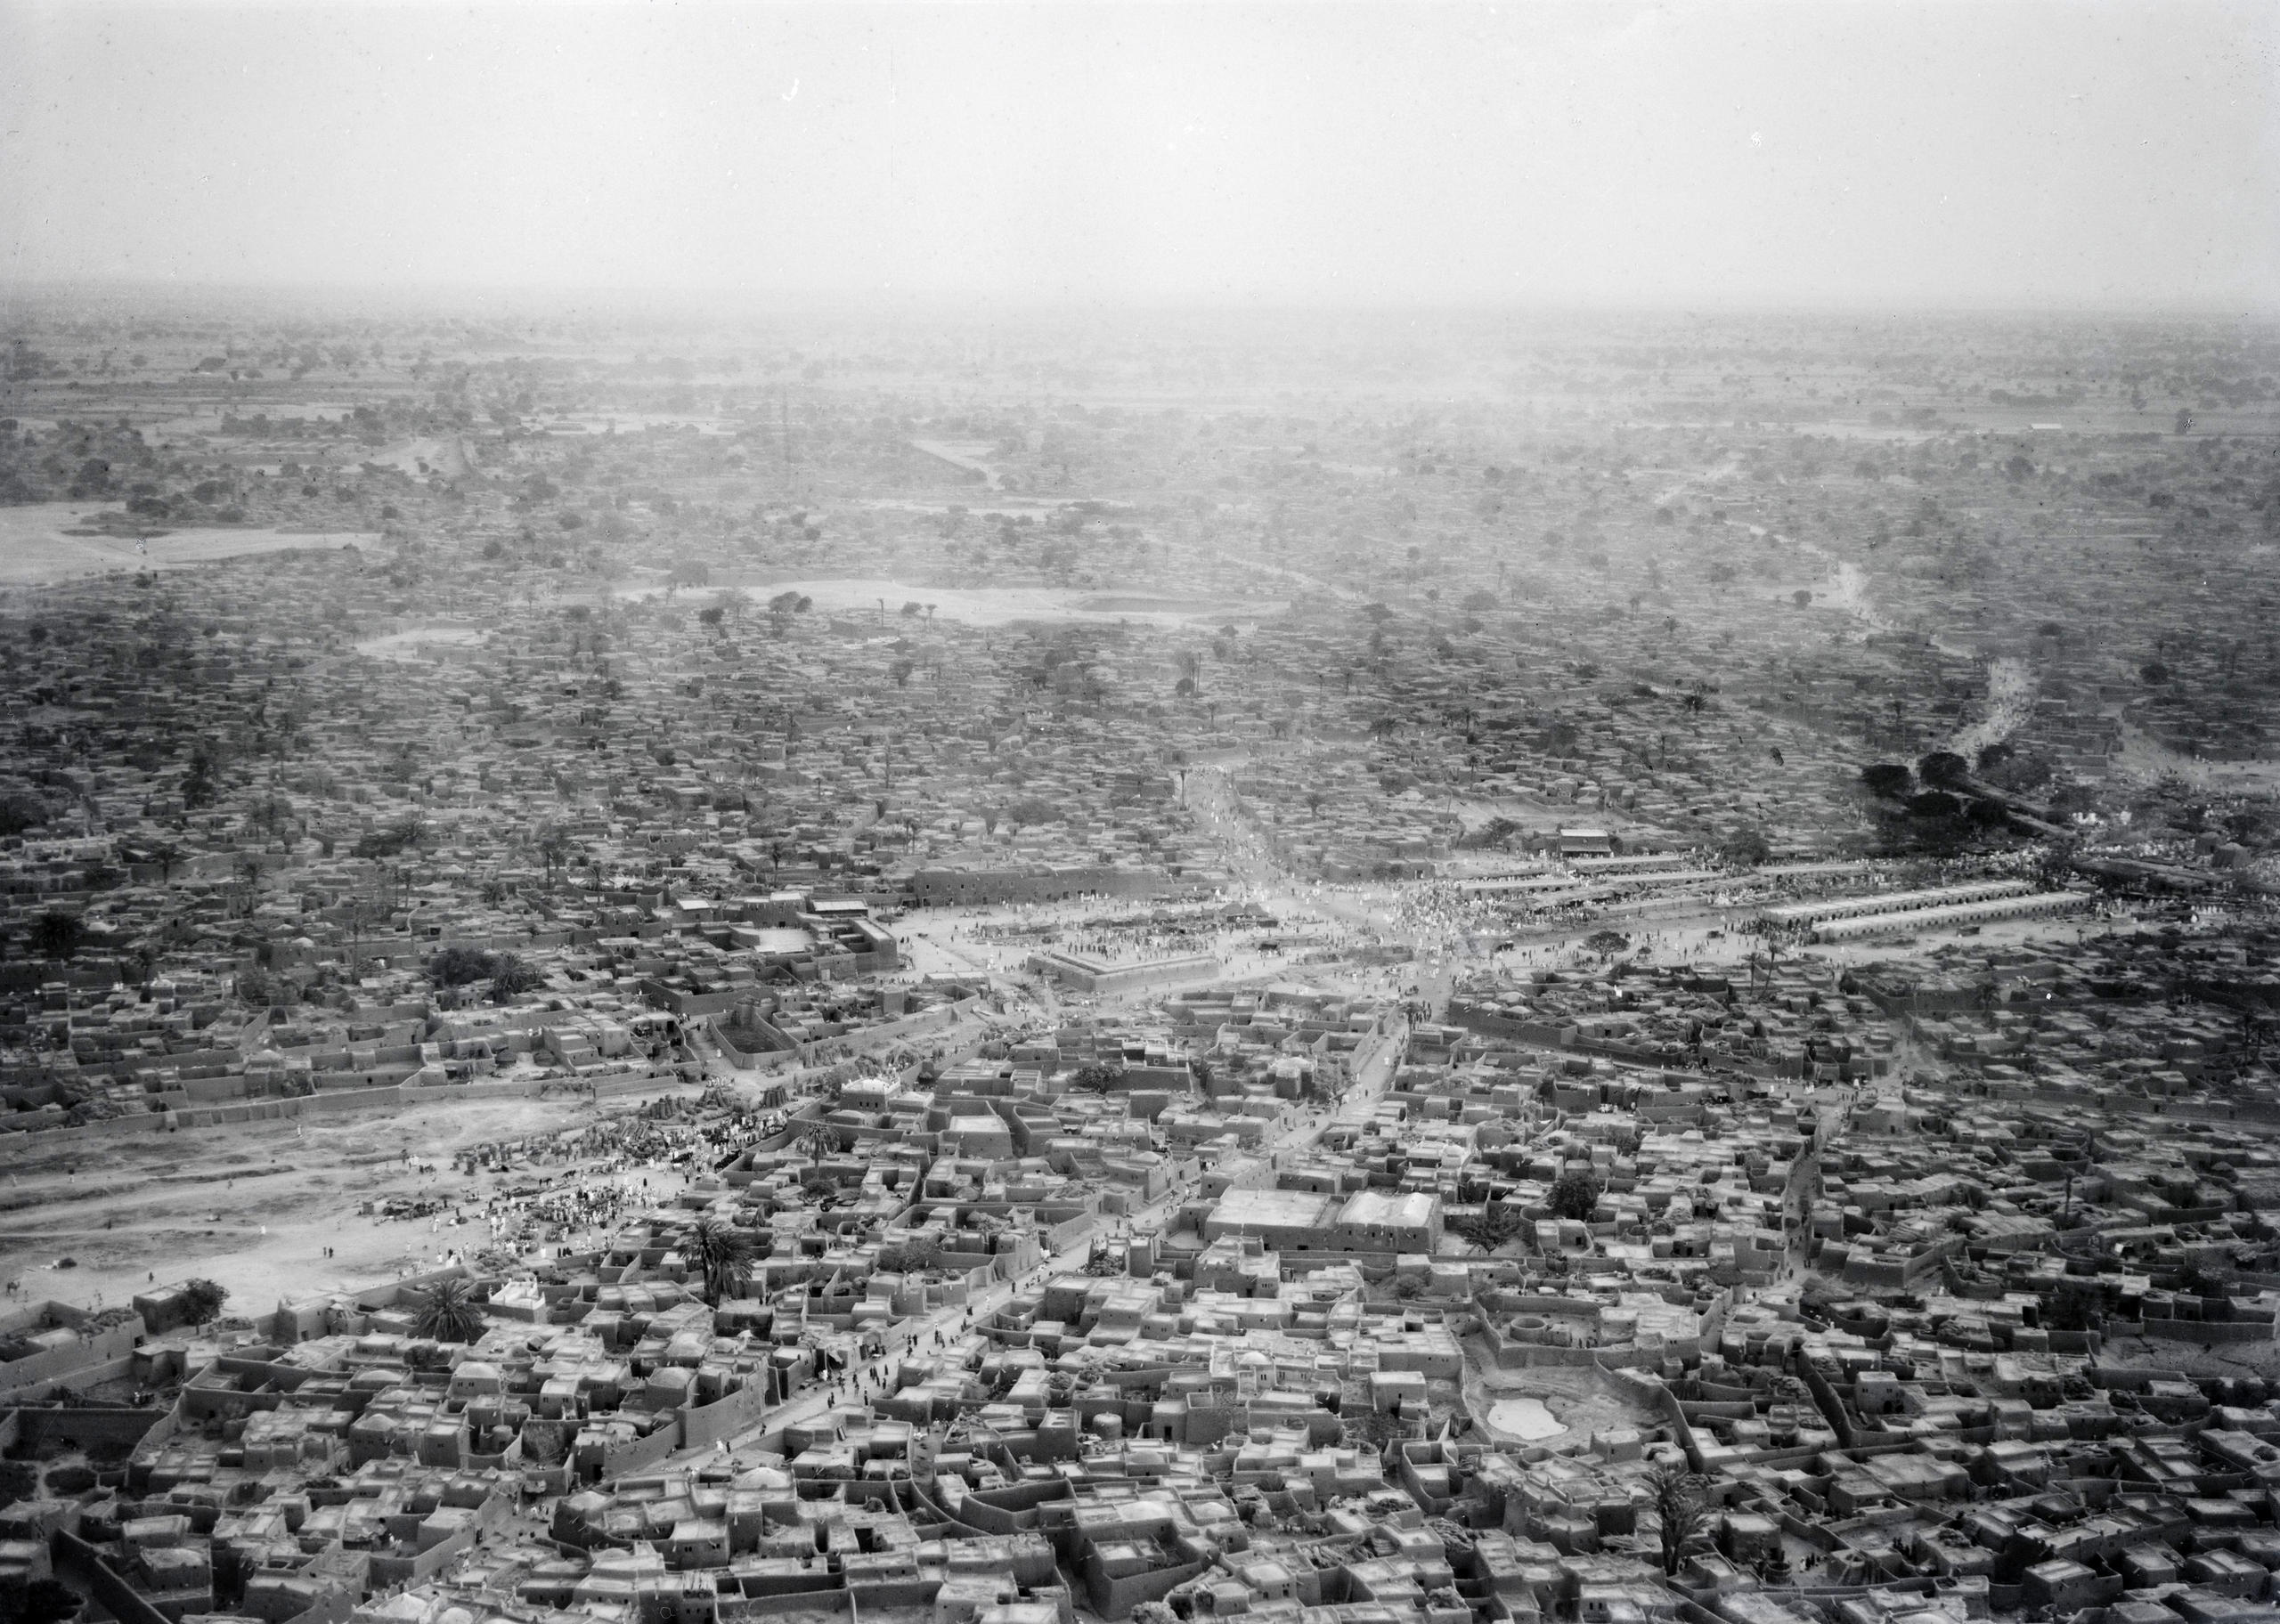 Город Ка́но (Kano) на севере Нигерии, административный центр штата Кано. Съемка с воздуха, 1930/31 гг.